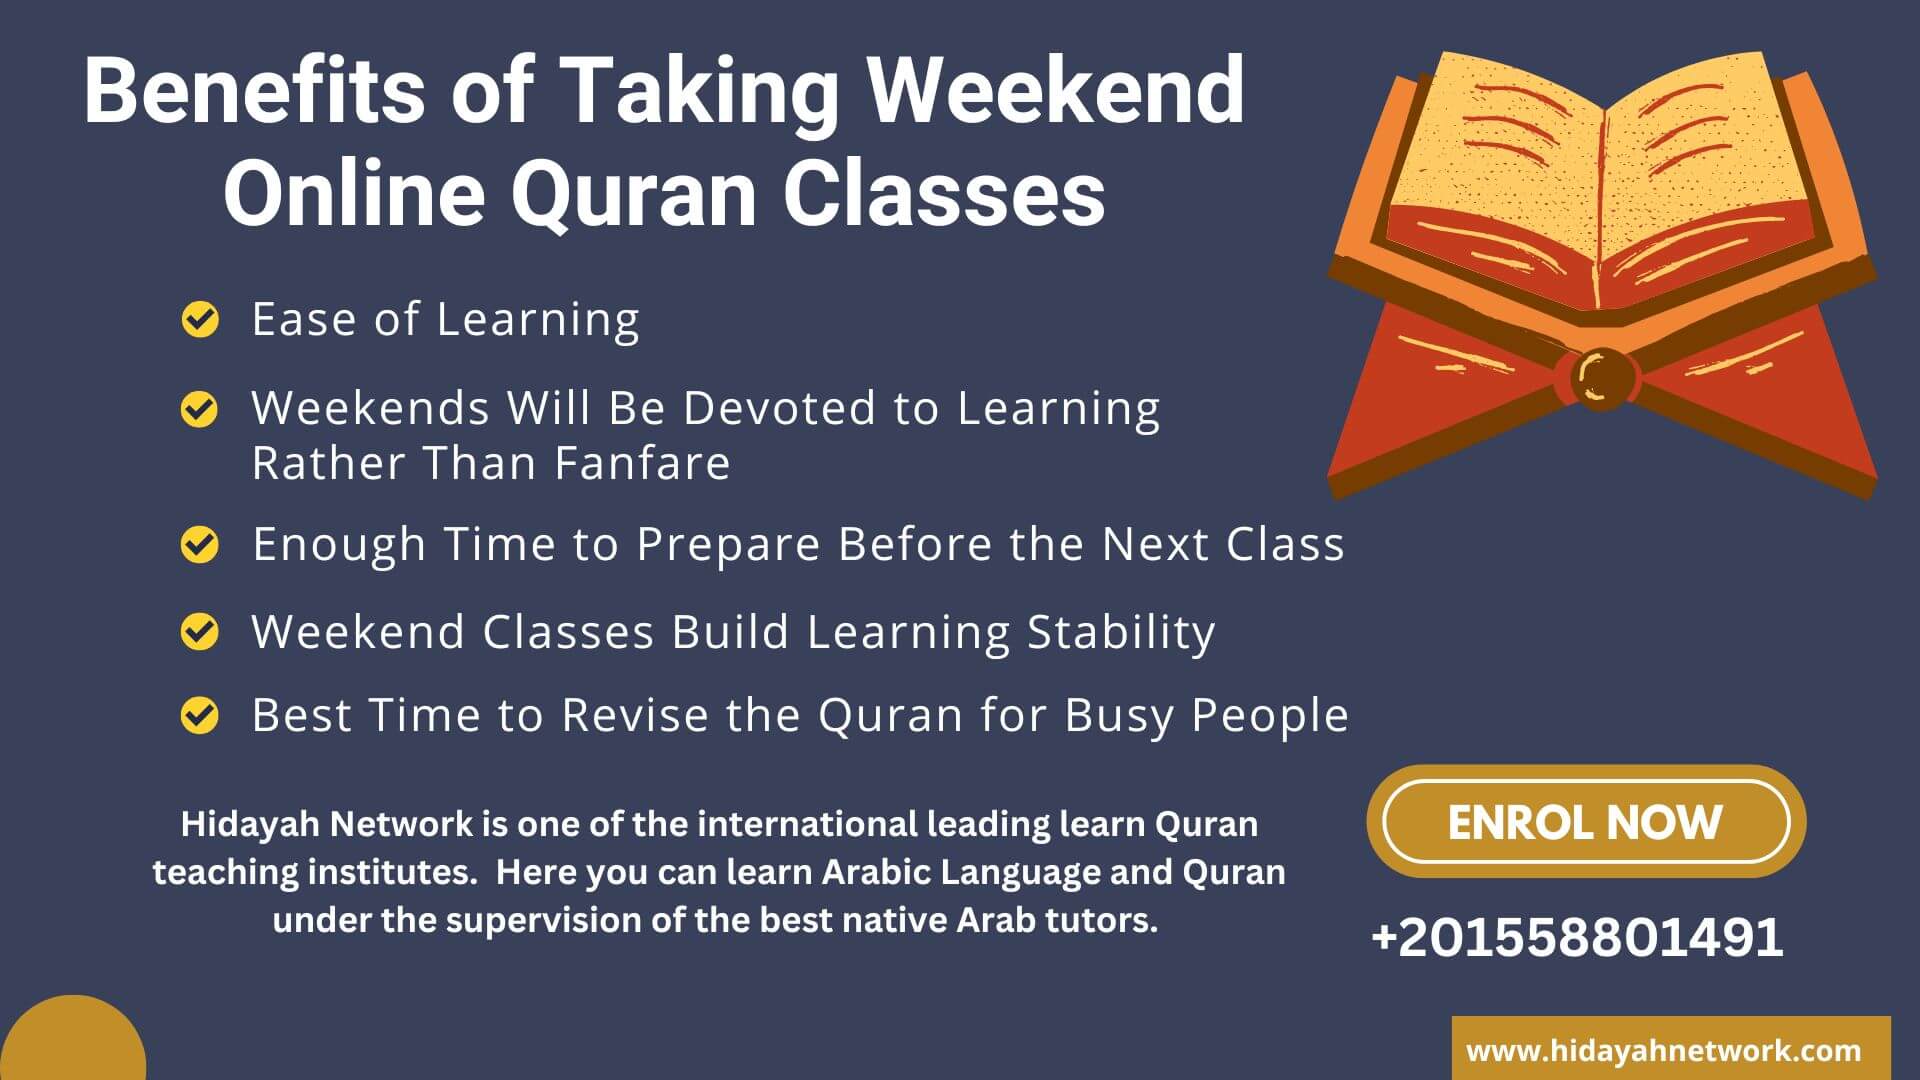 Benefits of Taking Weekend Online Quran Classes